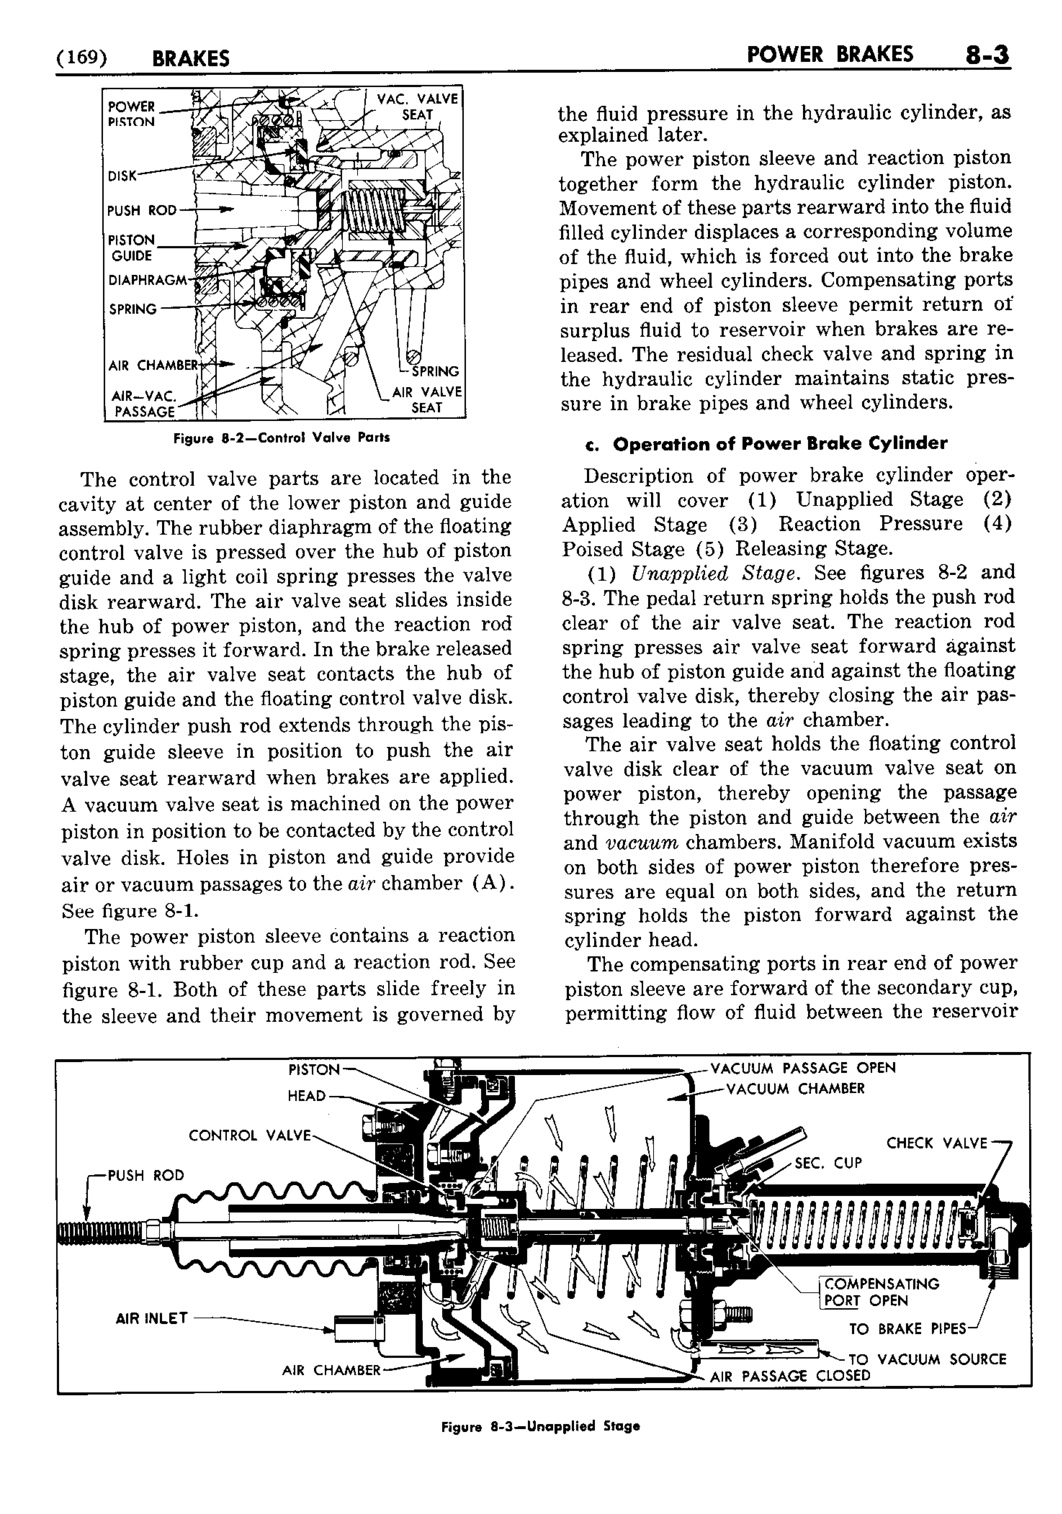 n_09 1953 Buick Shop Manual - Brakes-003-003.jpg